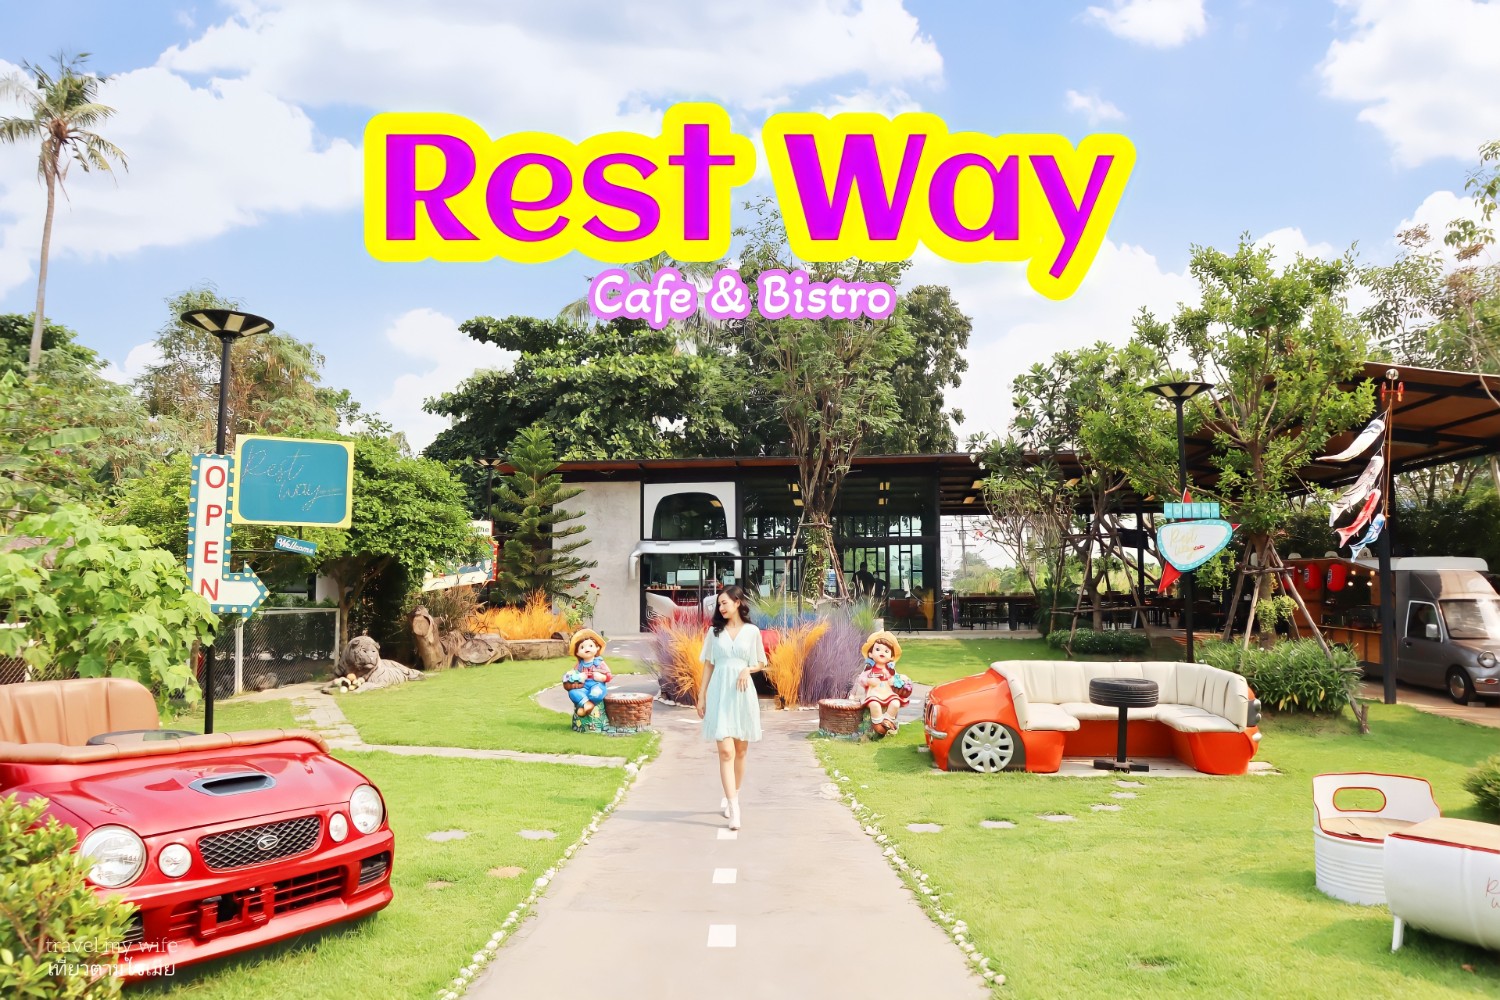 [SR] Rest Way Cafe & Bistro คาเฟ่ระหว่างเดินทาง pantip